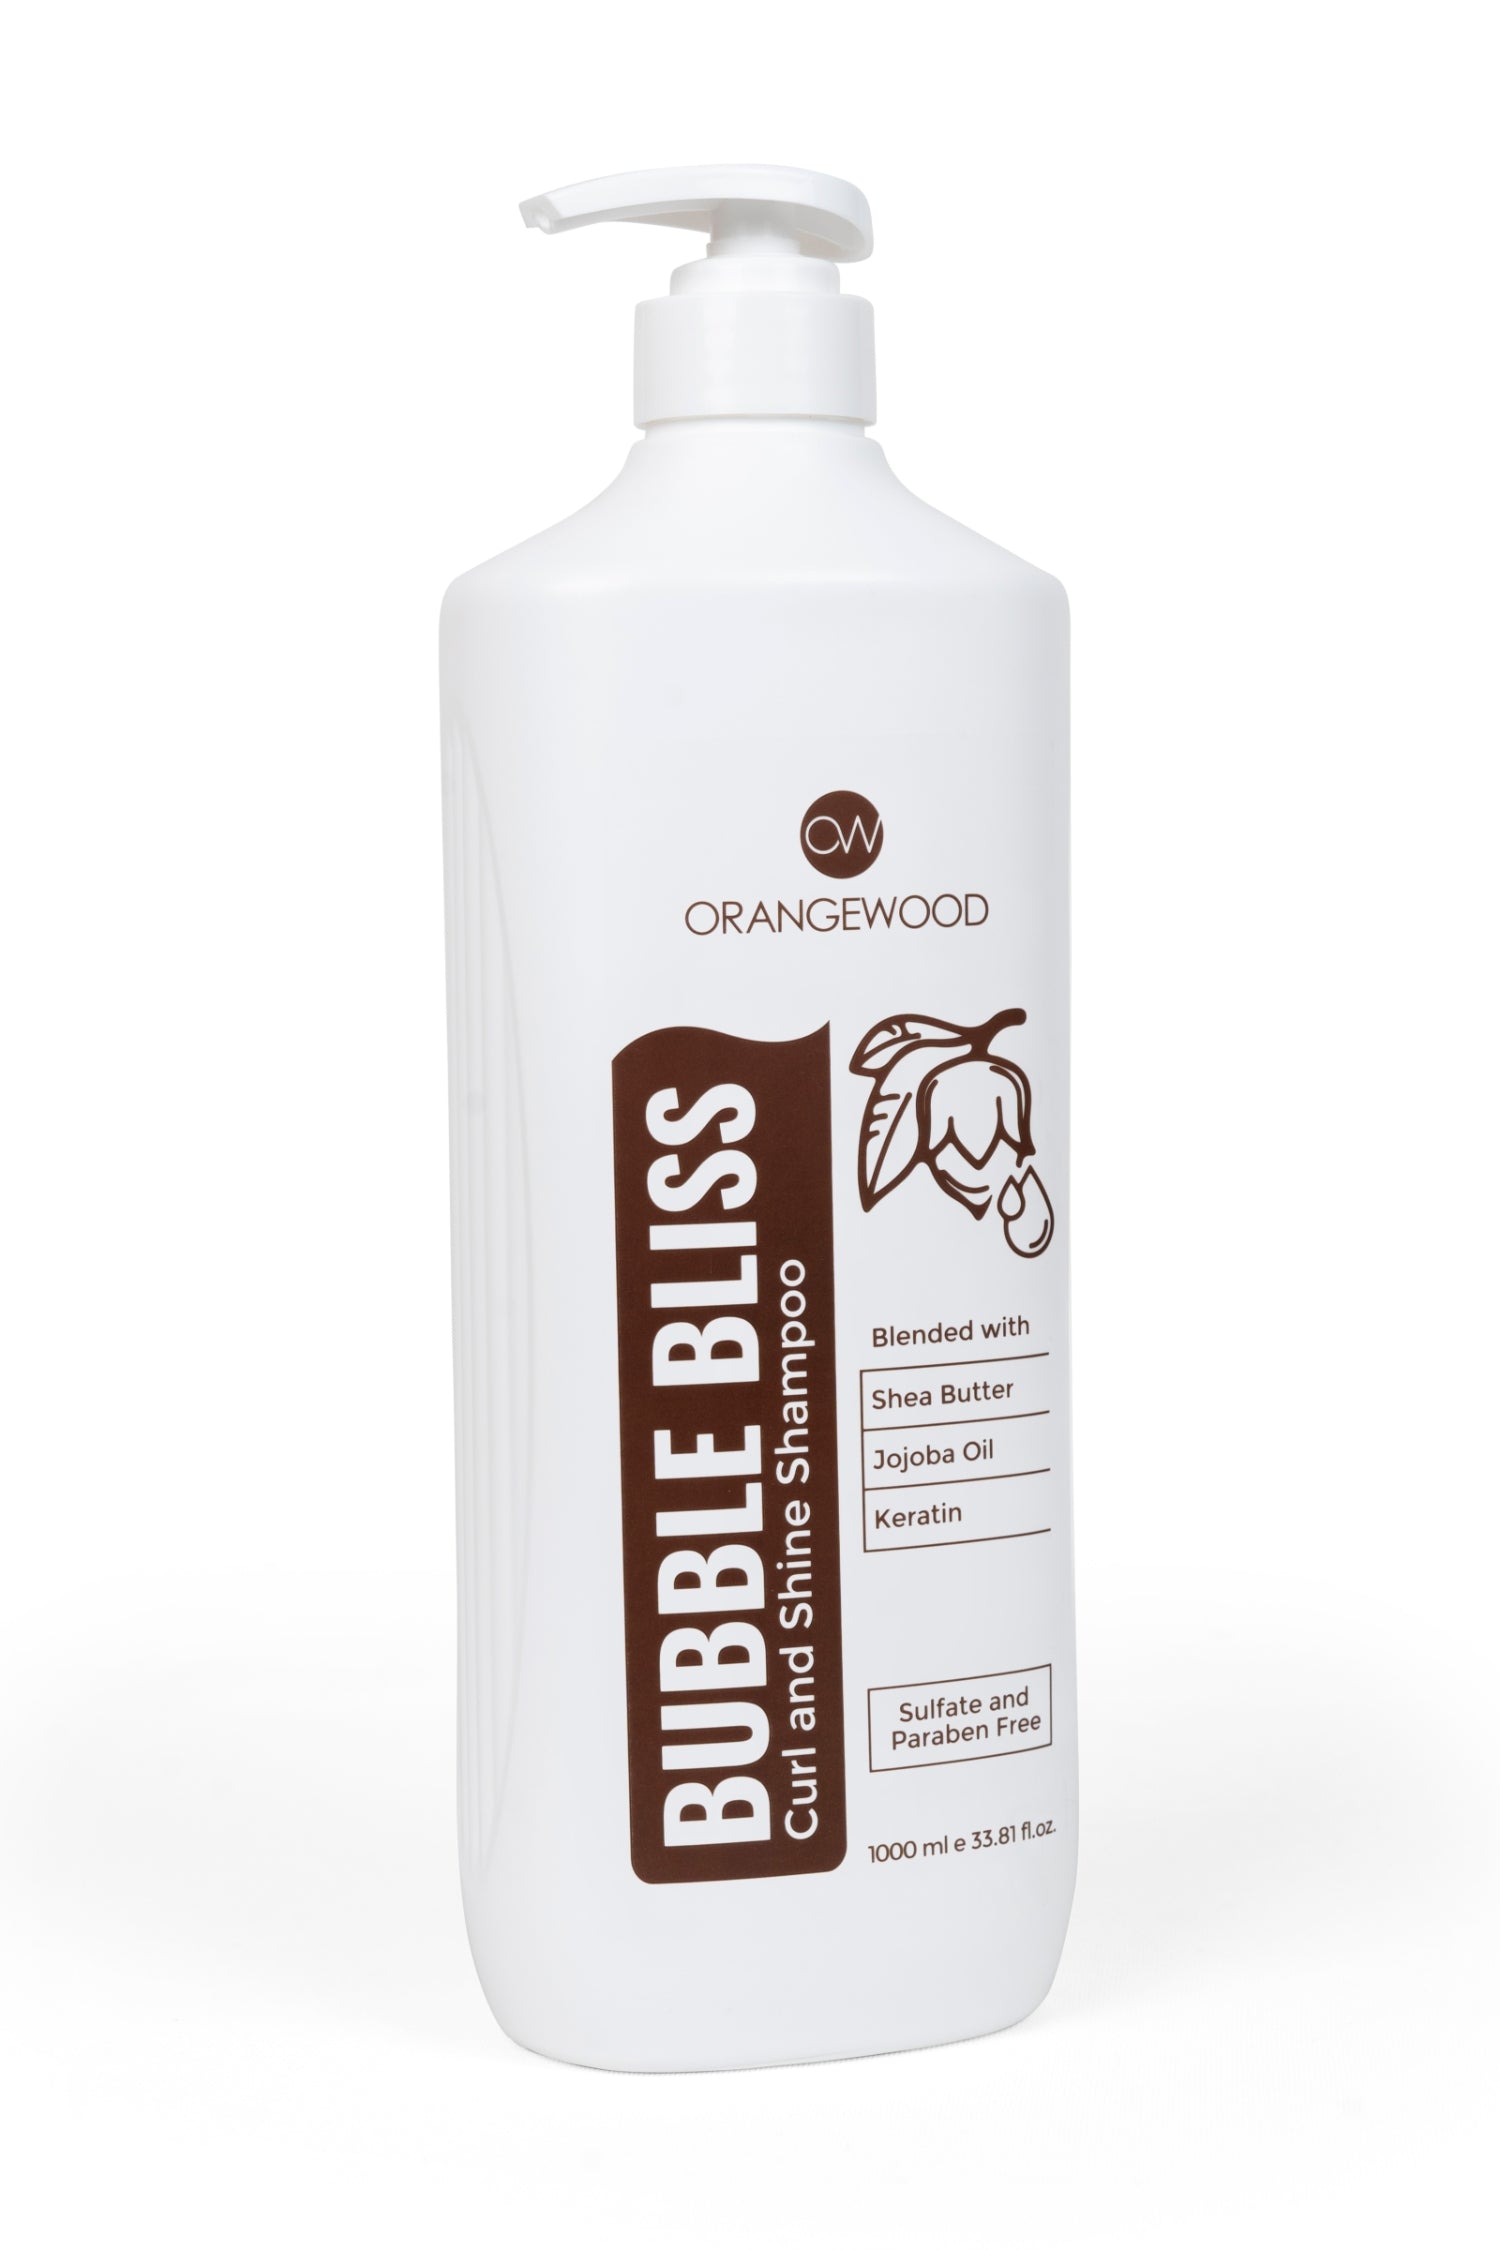 Orangewood Bubble Bliss Curl and Shine Shampoo - 1000ml